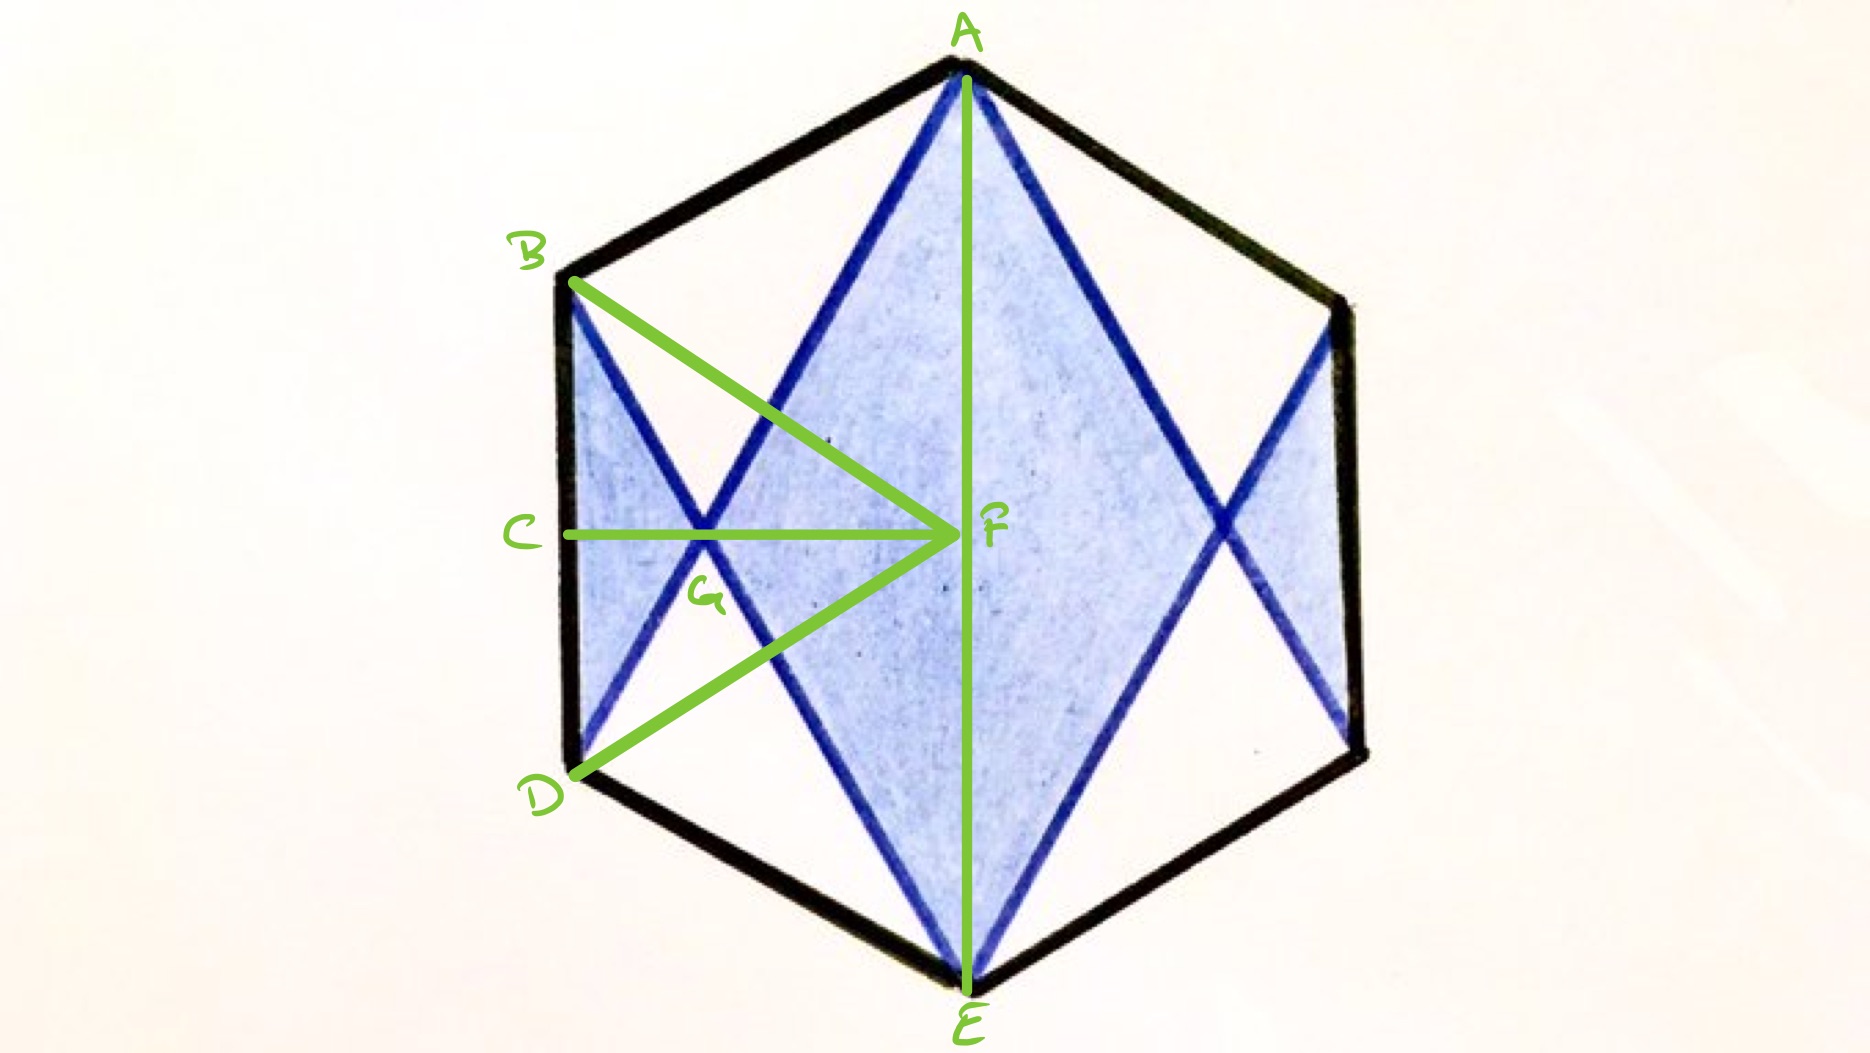 Crossed hexagon labelled